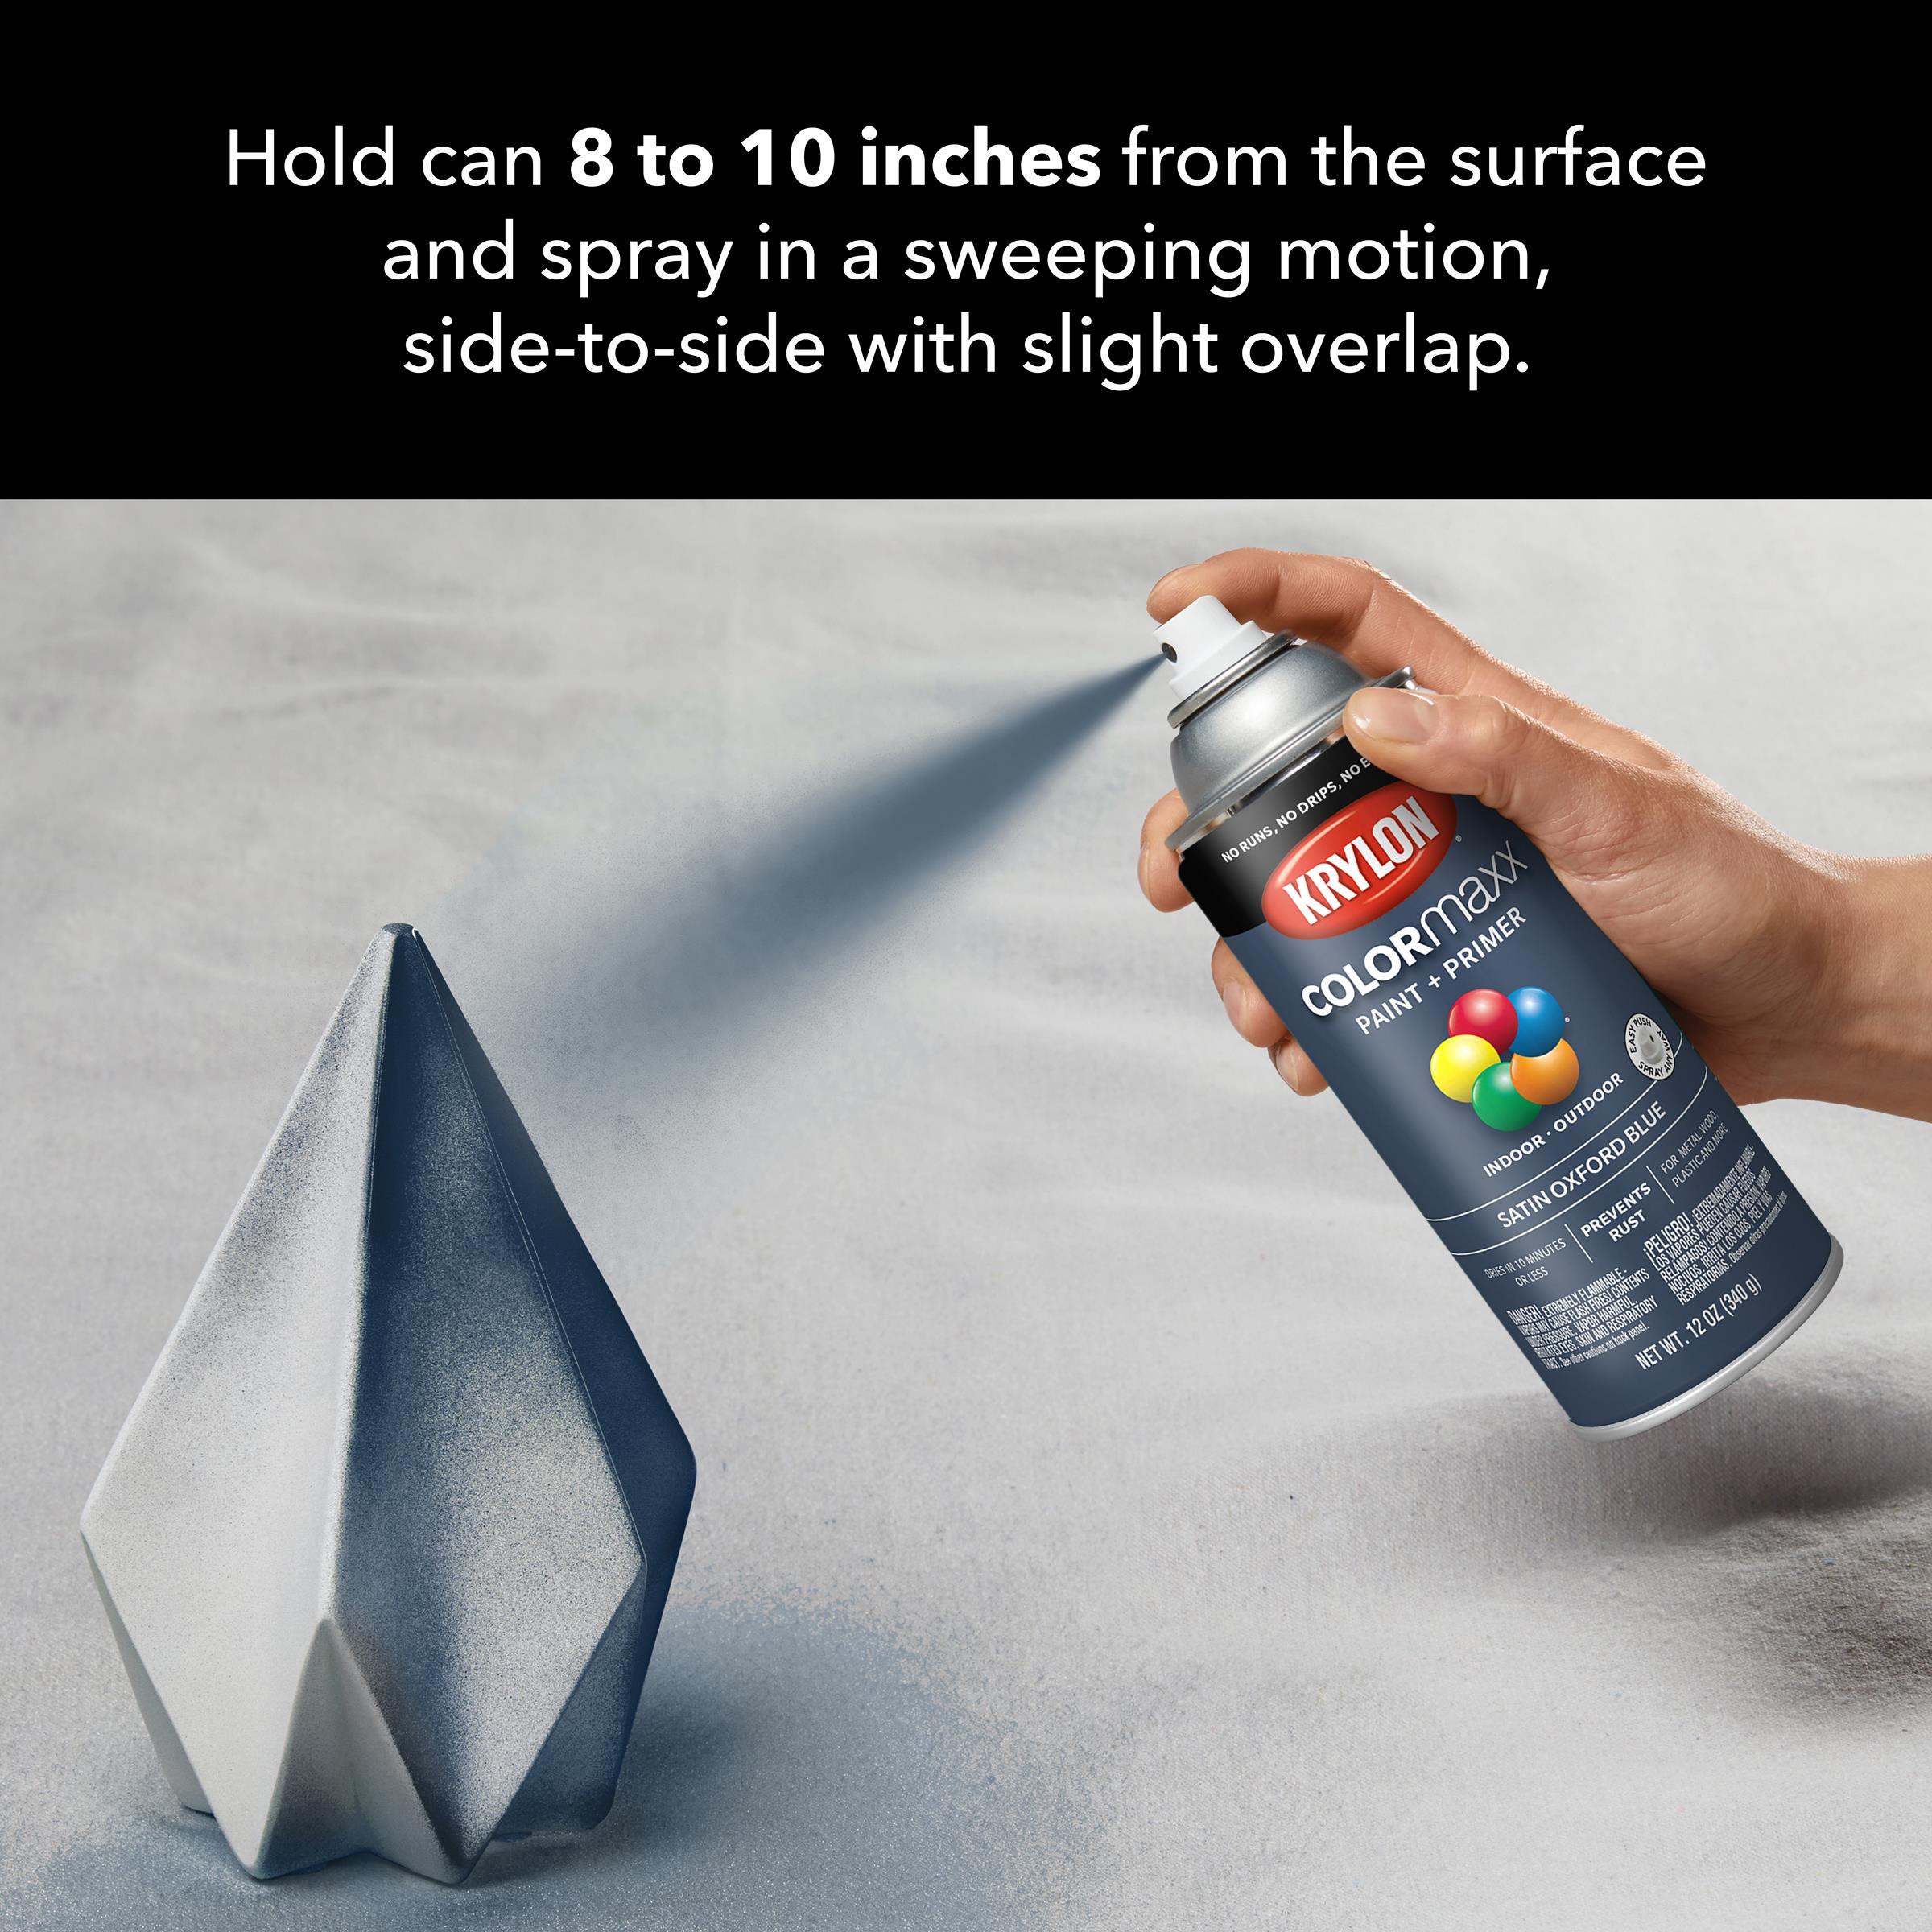 Krylon - Primer Spray Paint: Gray, Gloss, 16 oz - 30593362 - MSC